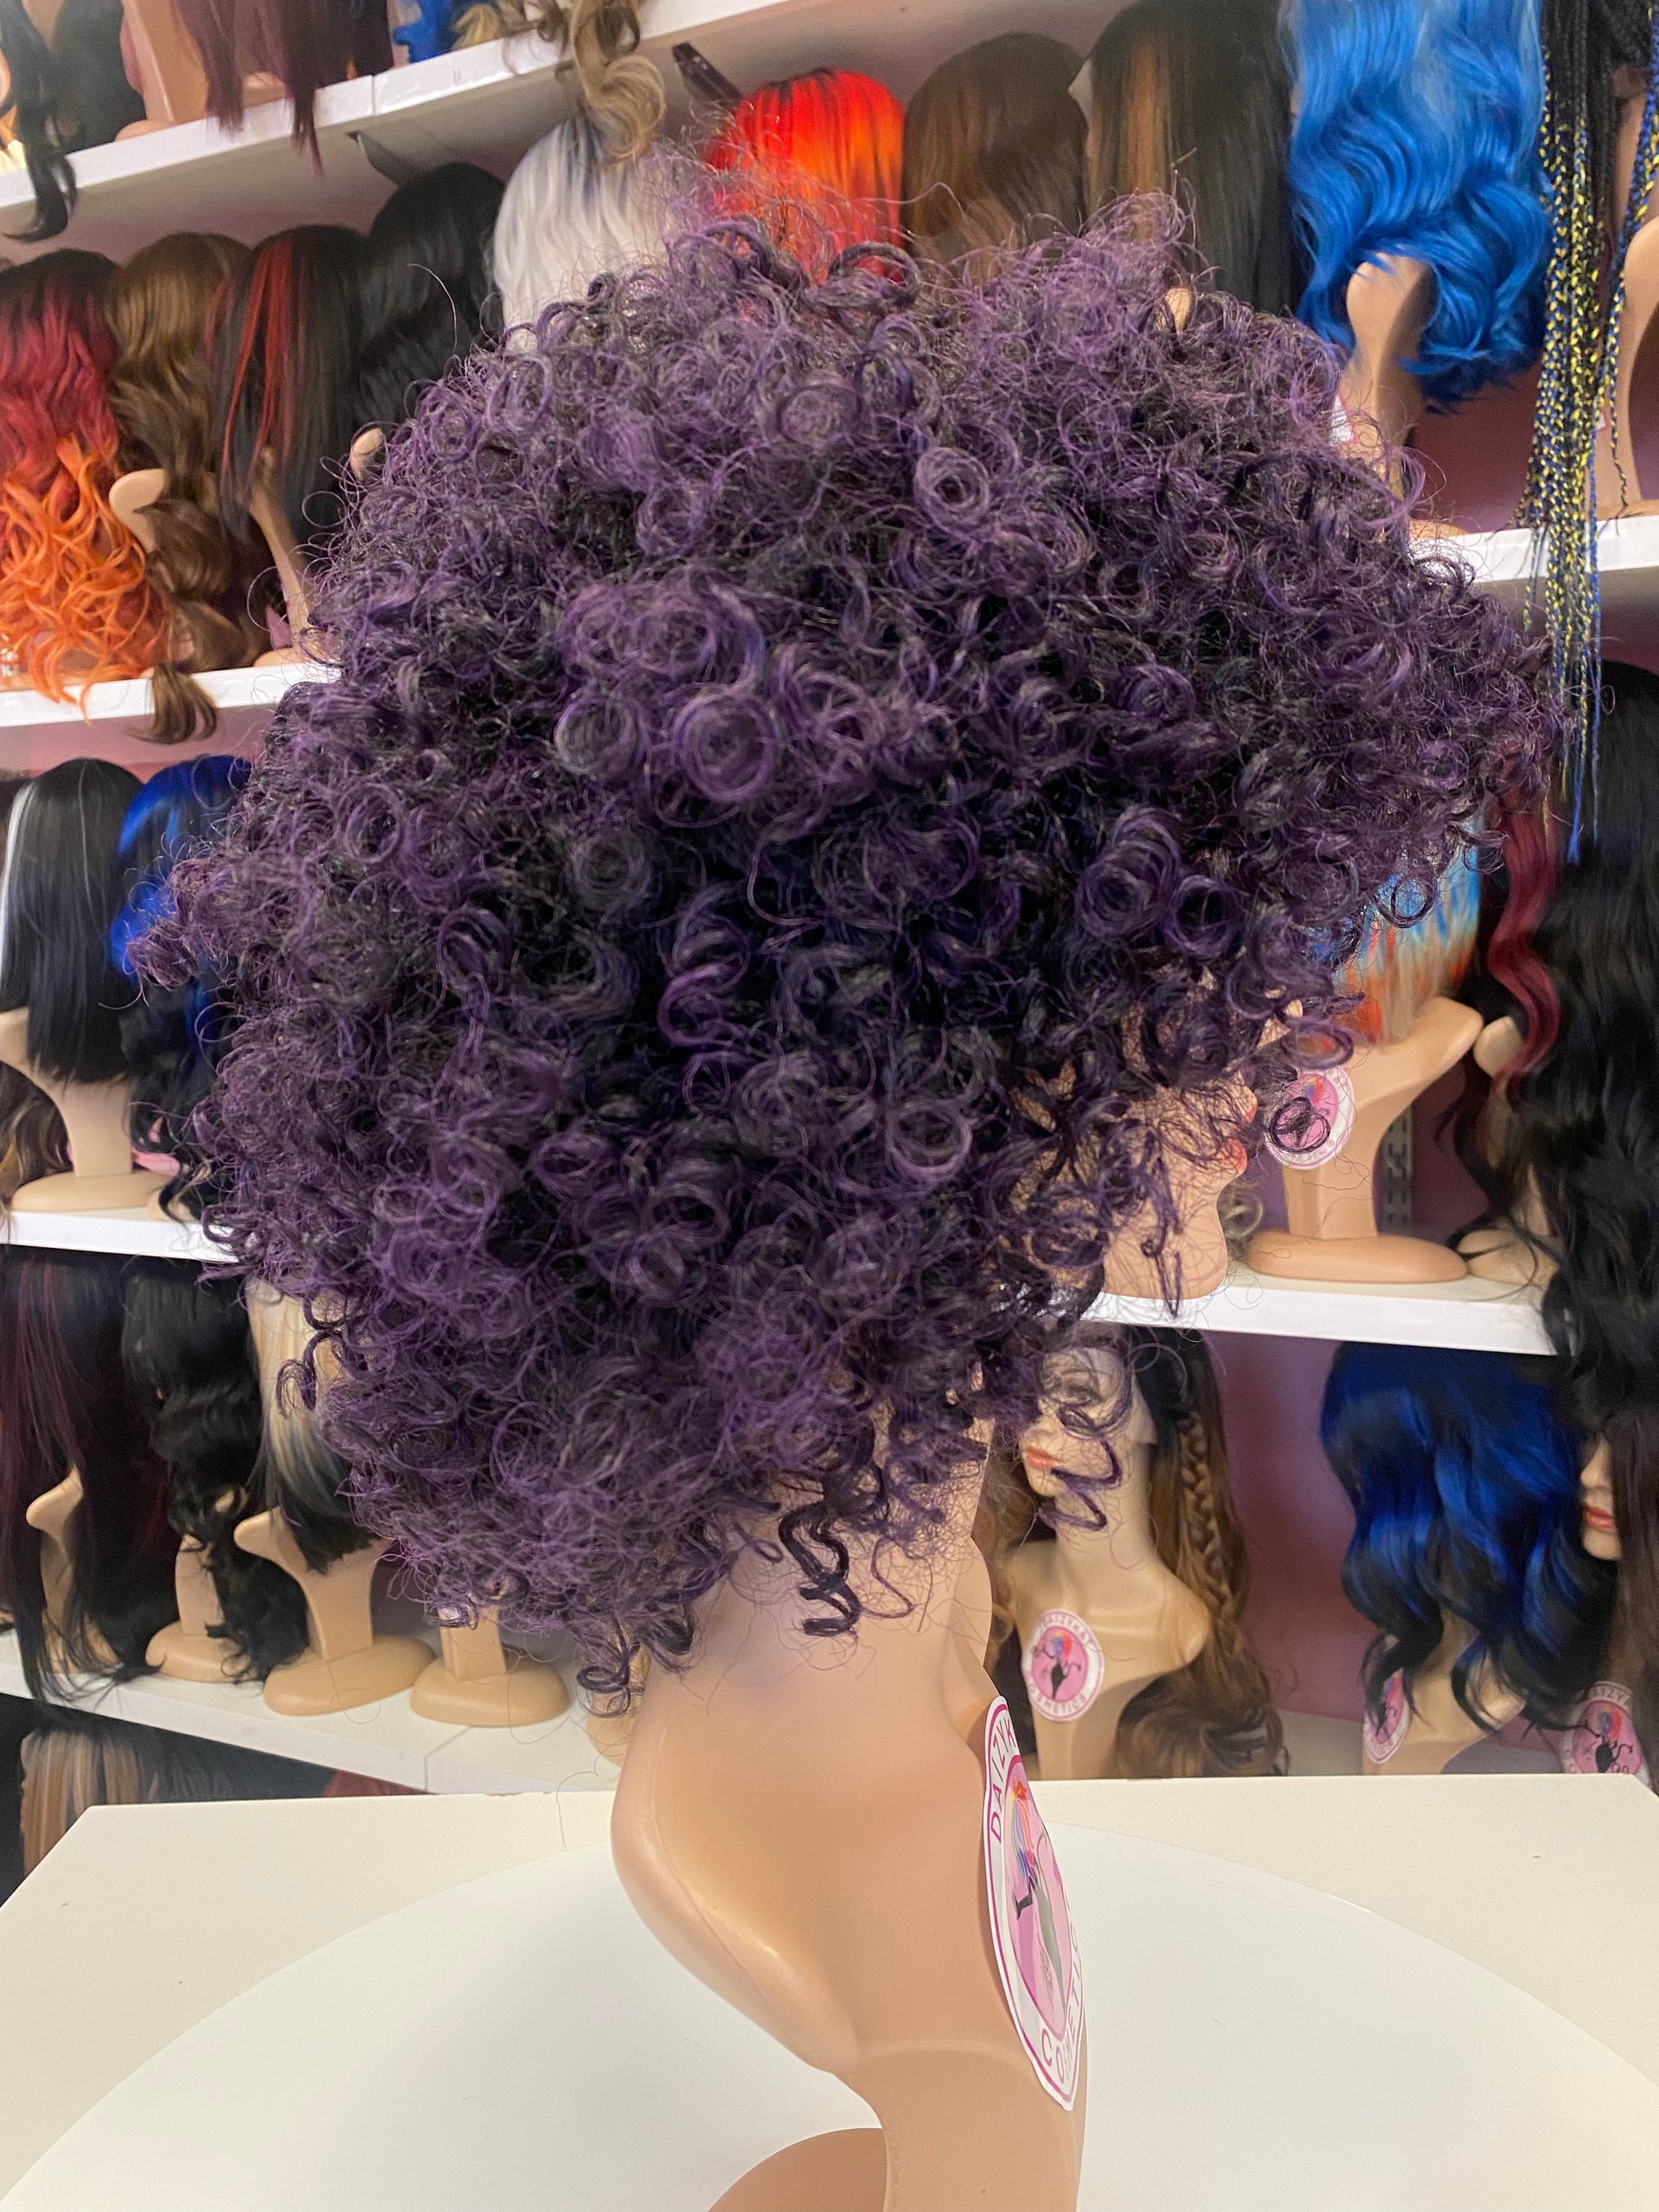 413 Gianna - Short Curly Wig - 1B/PURPLE - DaizyKat Cosmetics 413 Gianna - Short Curly Wig - 1B/PURPLE DaizyKat Cosmetics Wigs